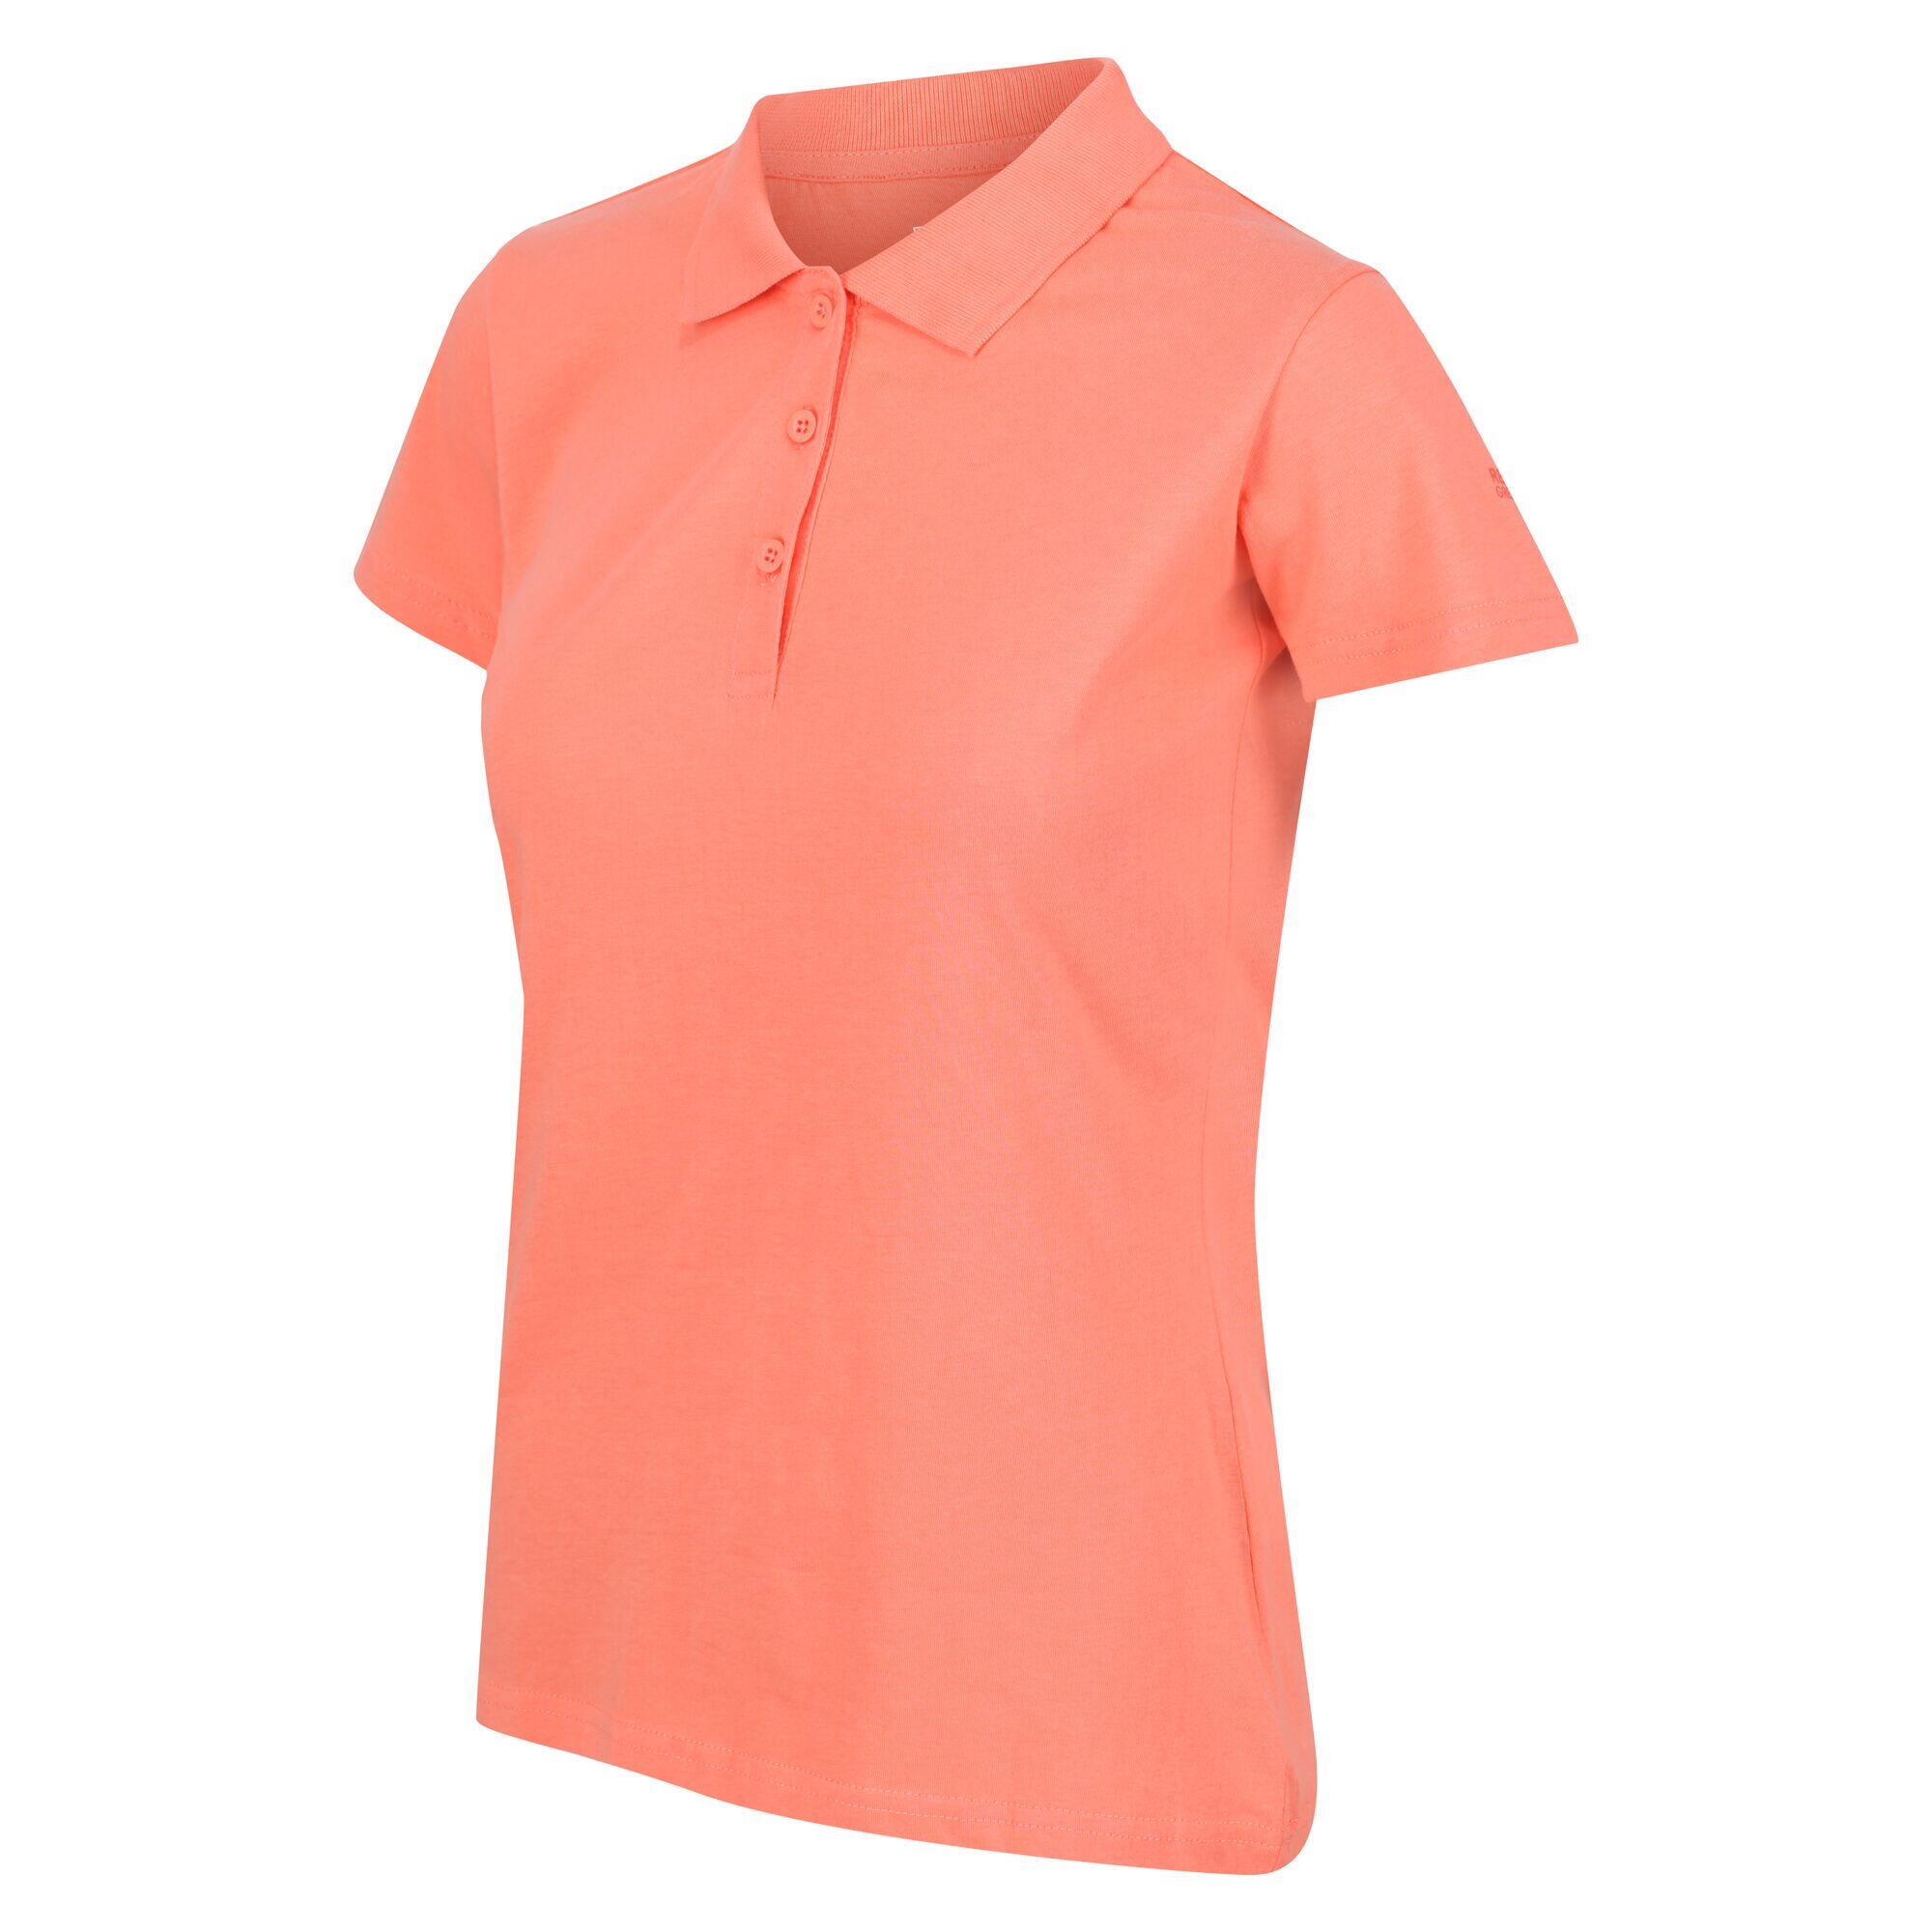 Sinton Women's Fitness Short Sleeve T-Shirt - Pink Coral 5/5